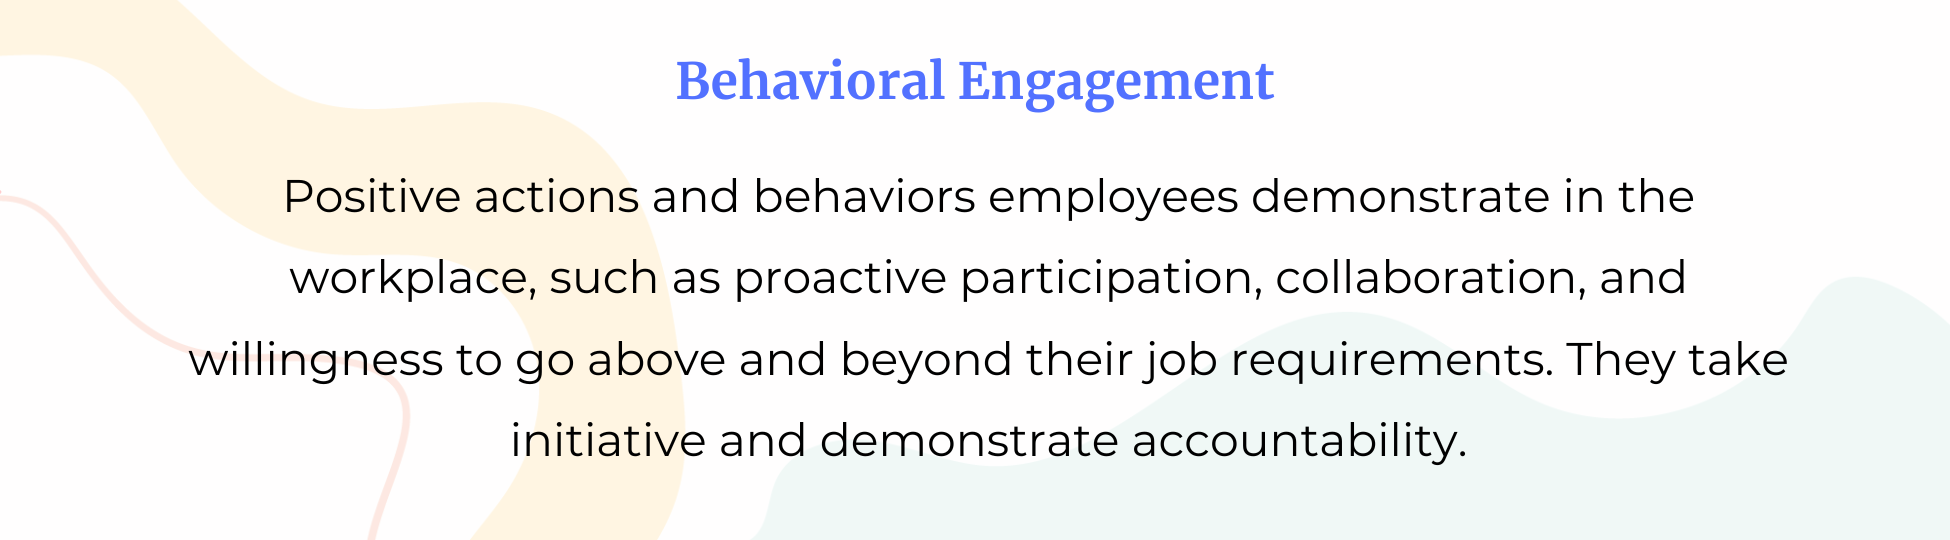 behavioral engagement